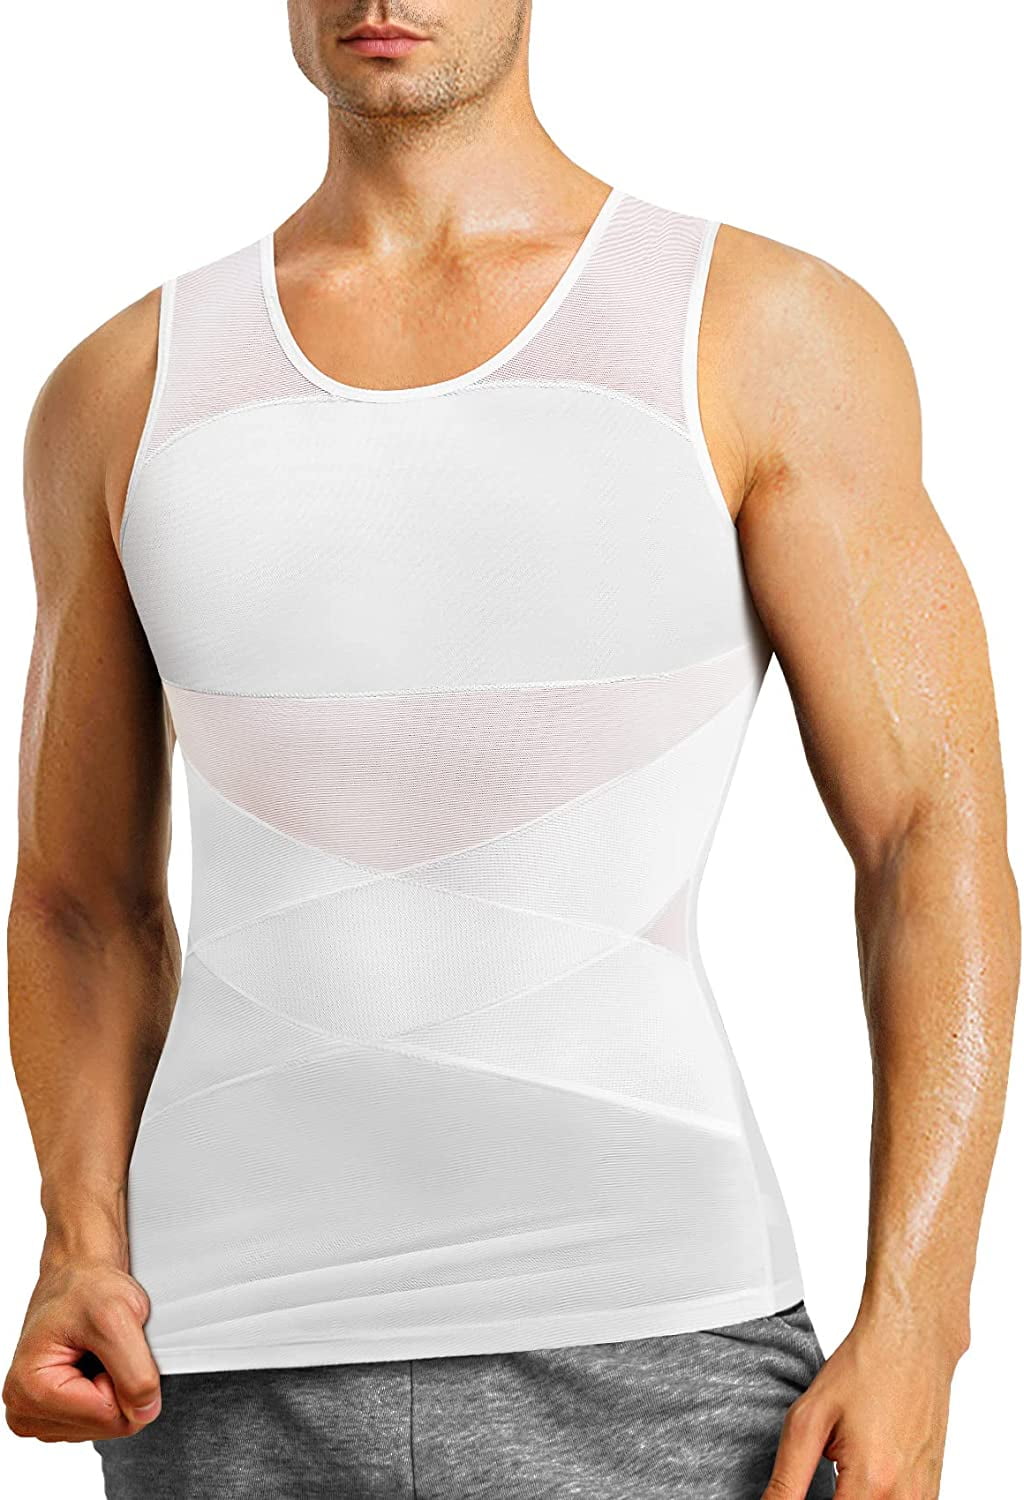 MOLUTAN Mens Compression Shirt Slimming Body Shaper Vest Sleeveless Undershirt Tank Top Tummy Control Shapewear for Men 